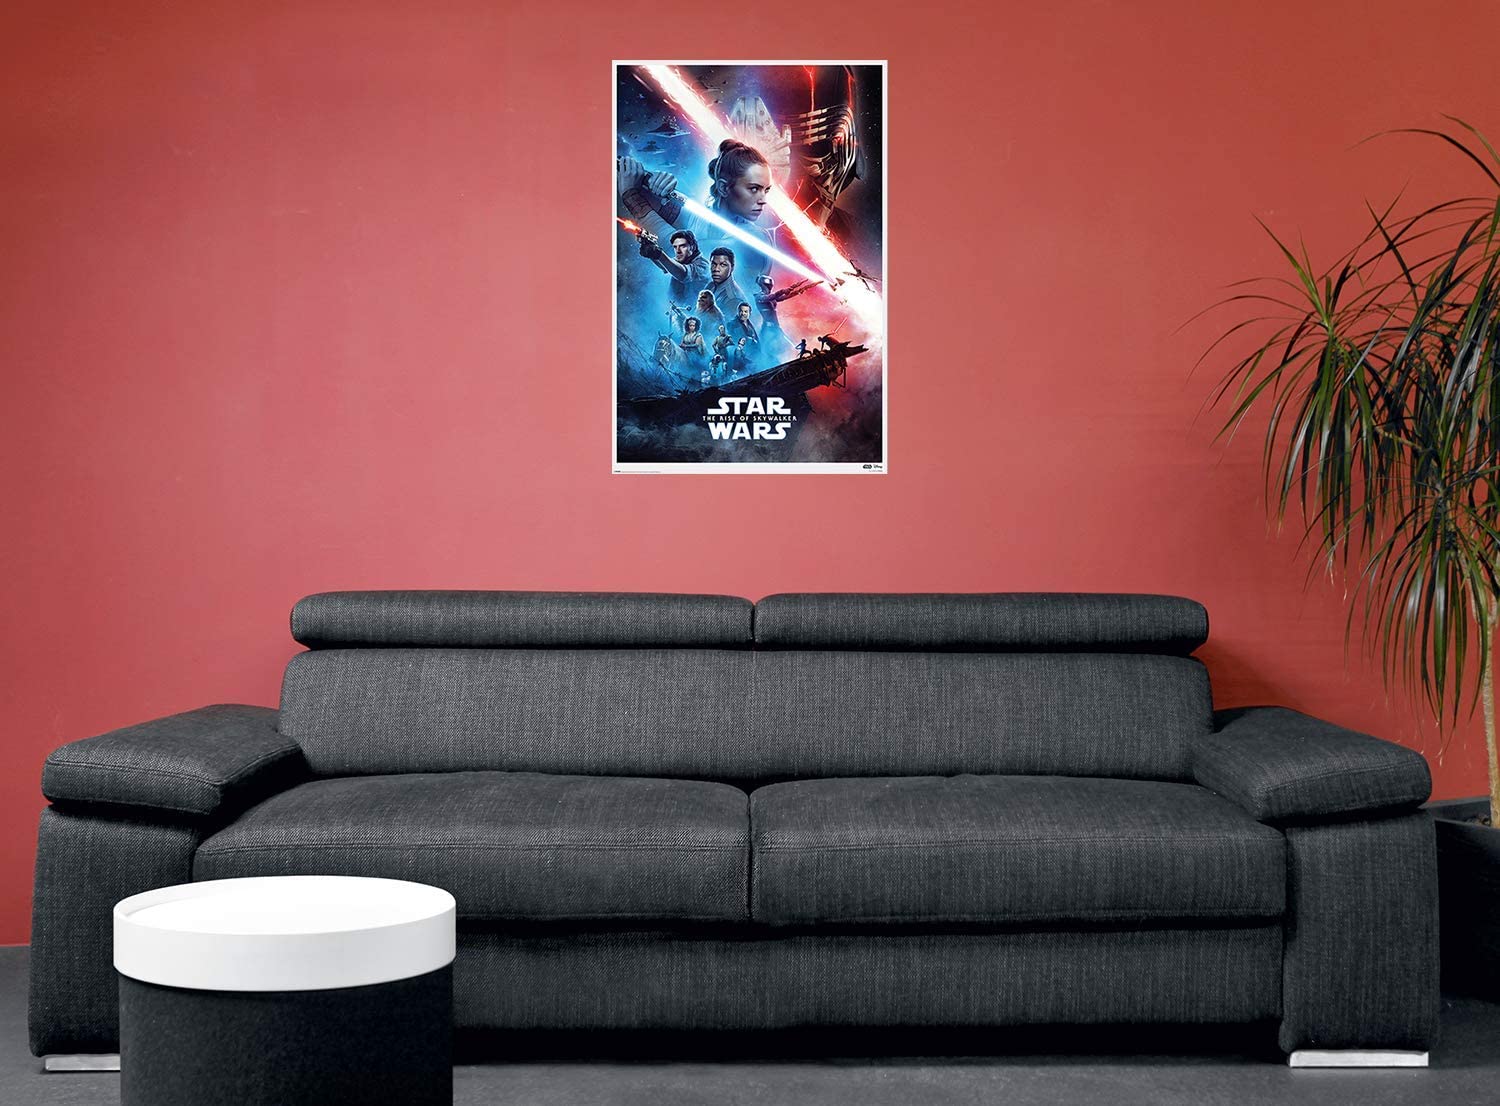 Star Wars - Rise of Skywalker Maxi Poster